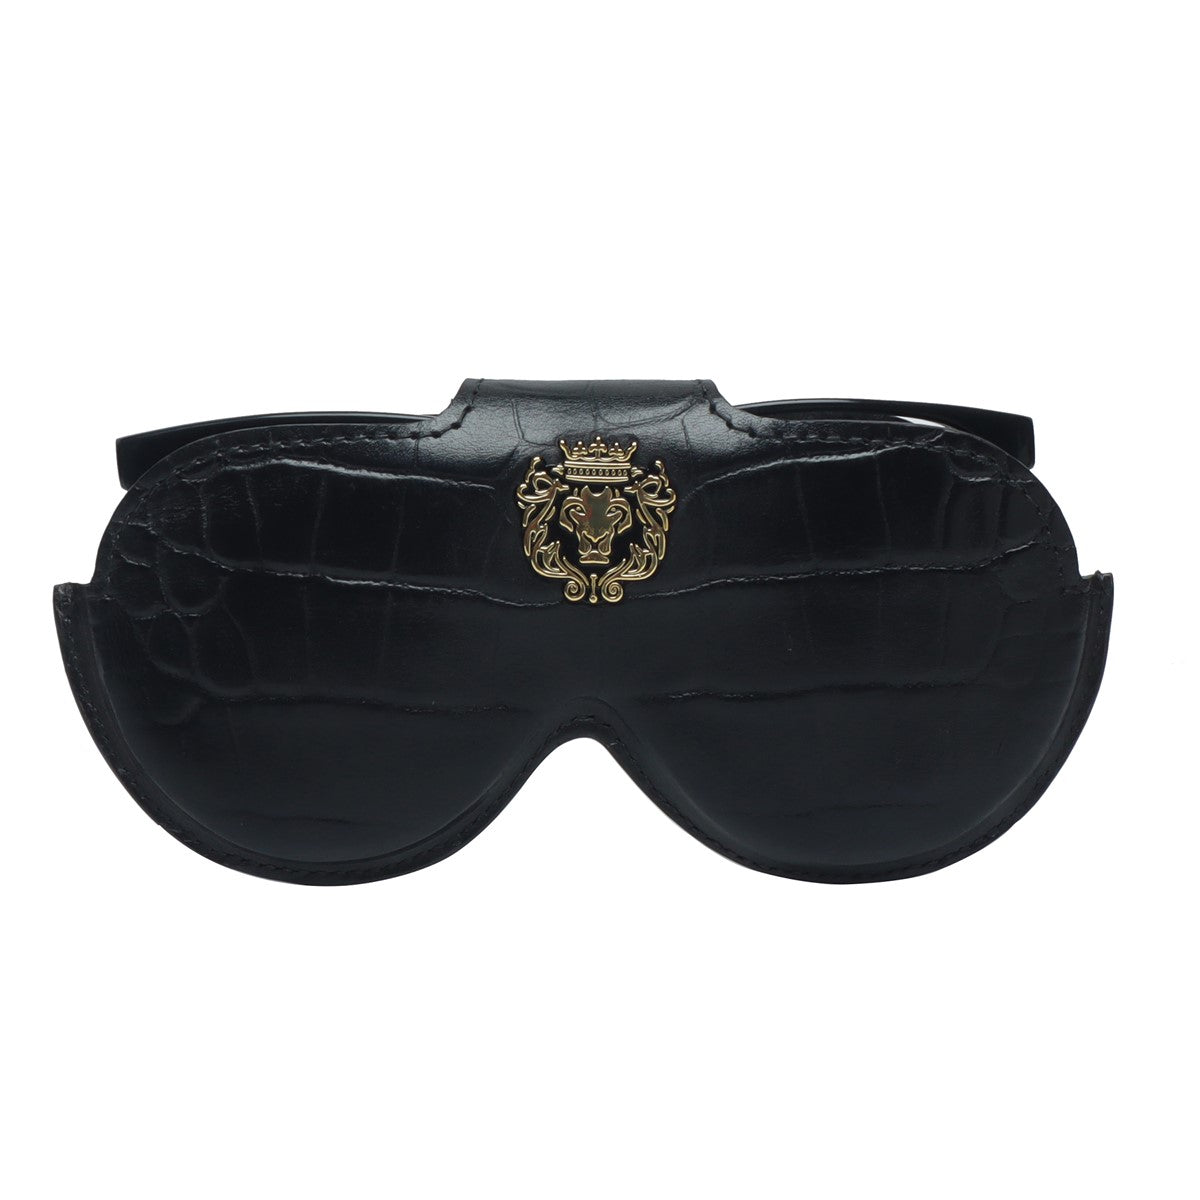 Black Croco Print Leather With Metal Lion Eyewear Glasses Cover by Brune & Bareskin